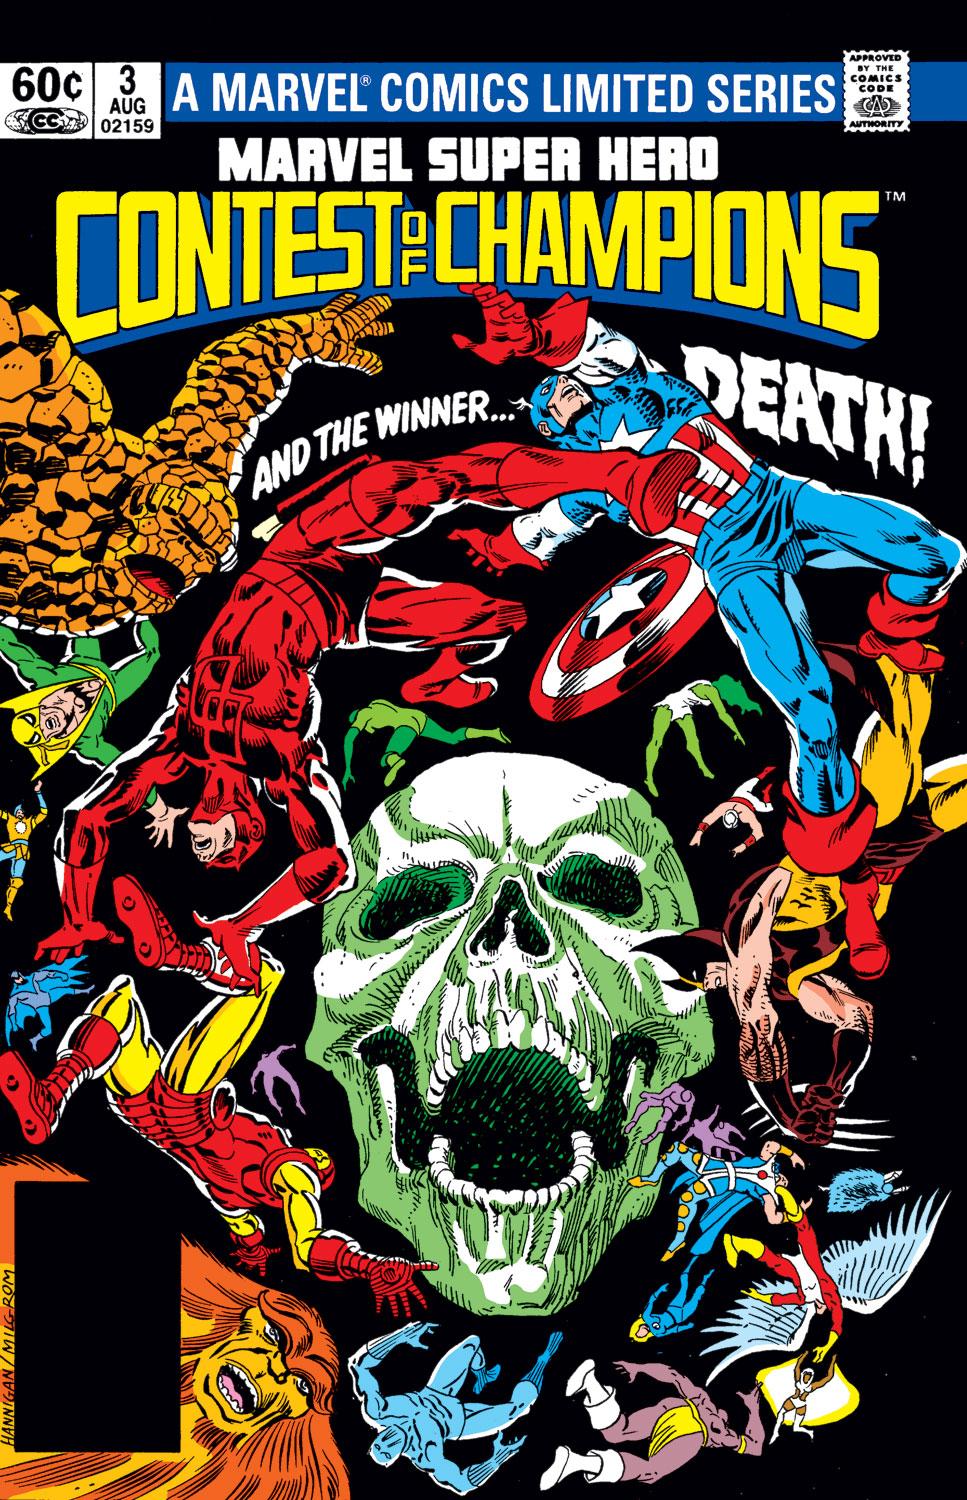 Marvel Super Hero Contest of Champions (1982) #3